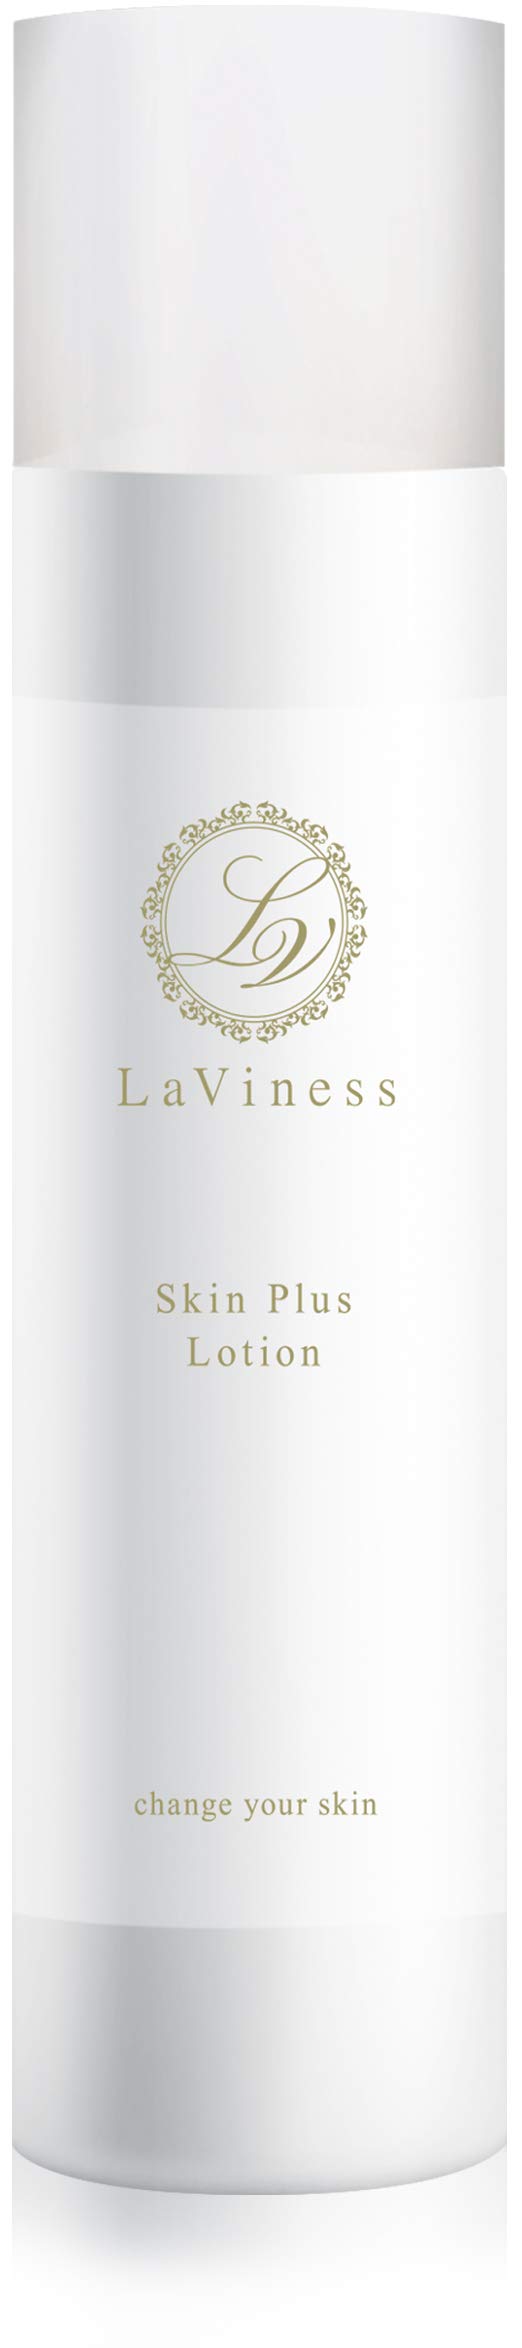 LaViness lotion moisturizing hyaluronic acid ceramide lactic acid bacteria